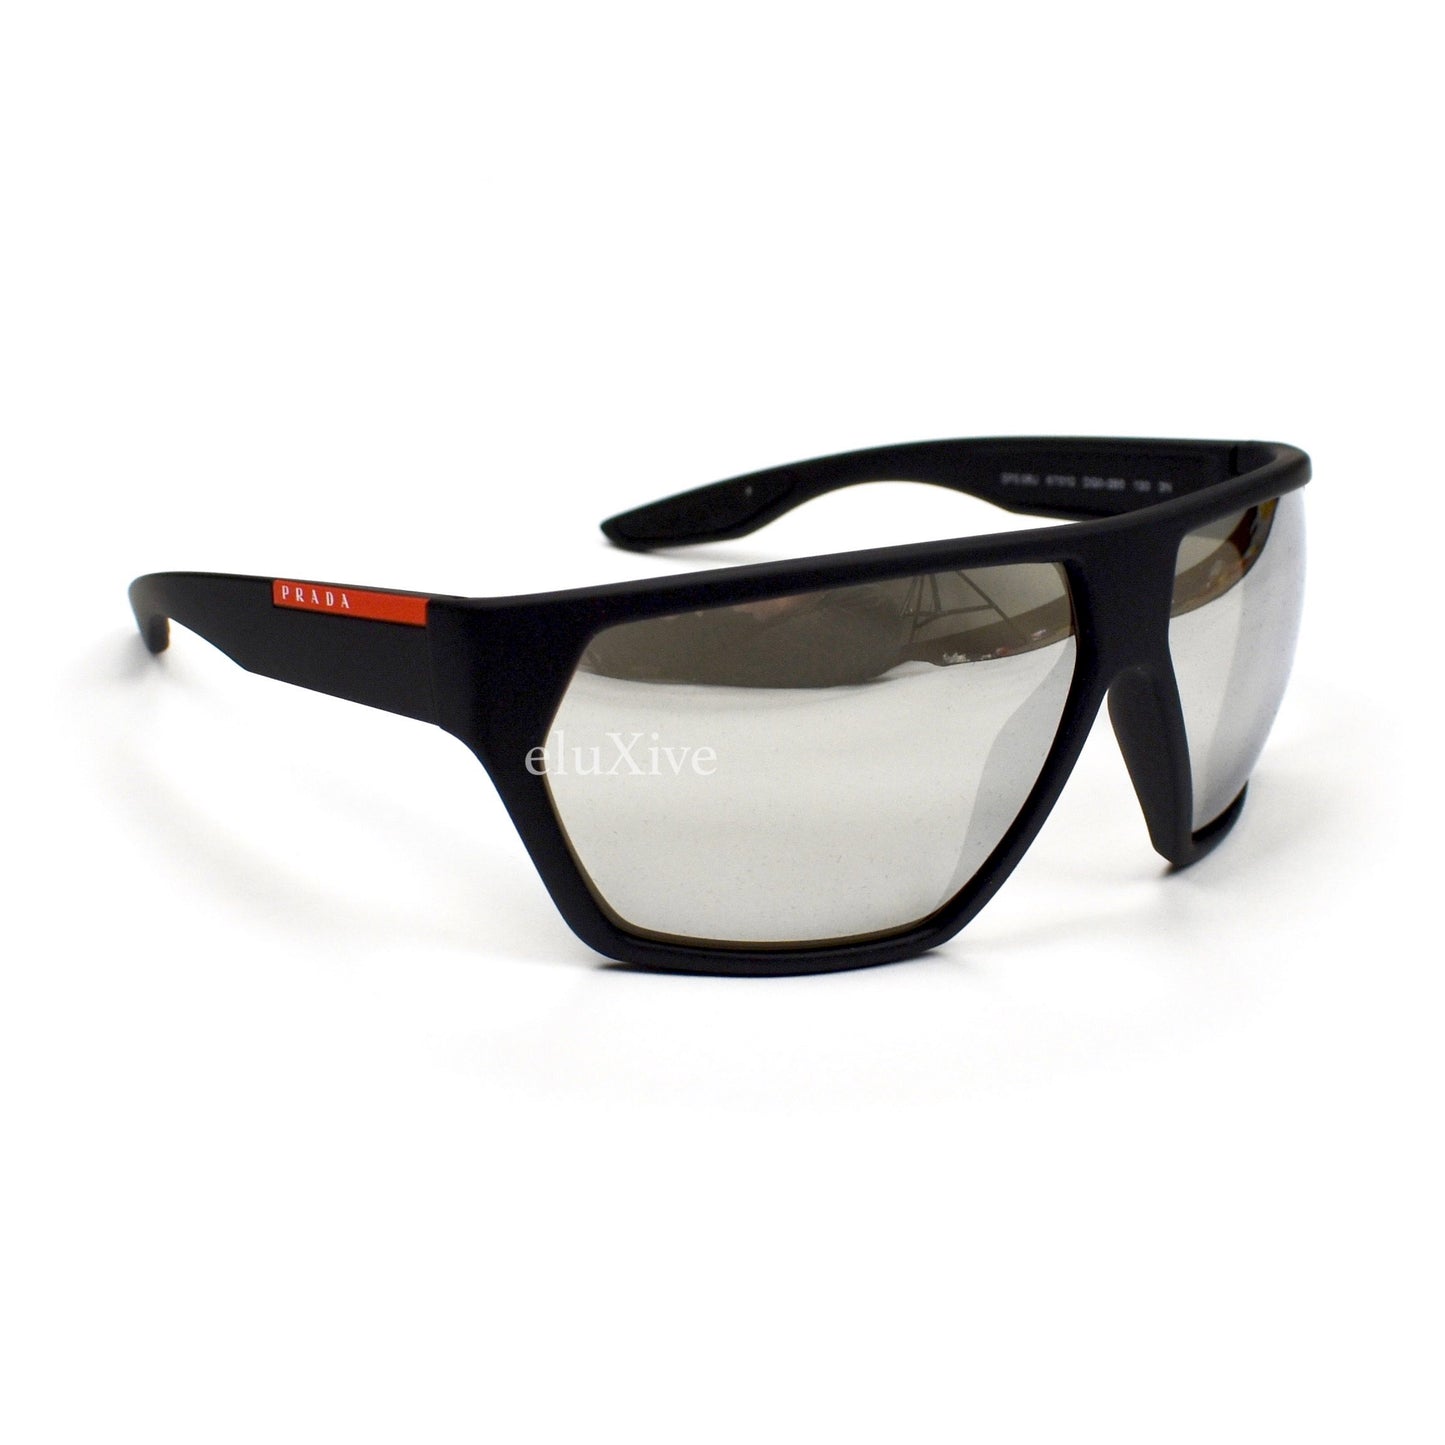 Prada - Black PS 08US Sport Sunglasses